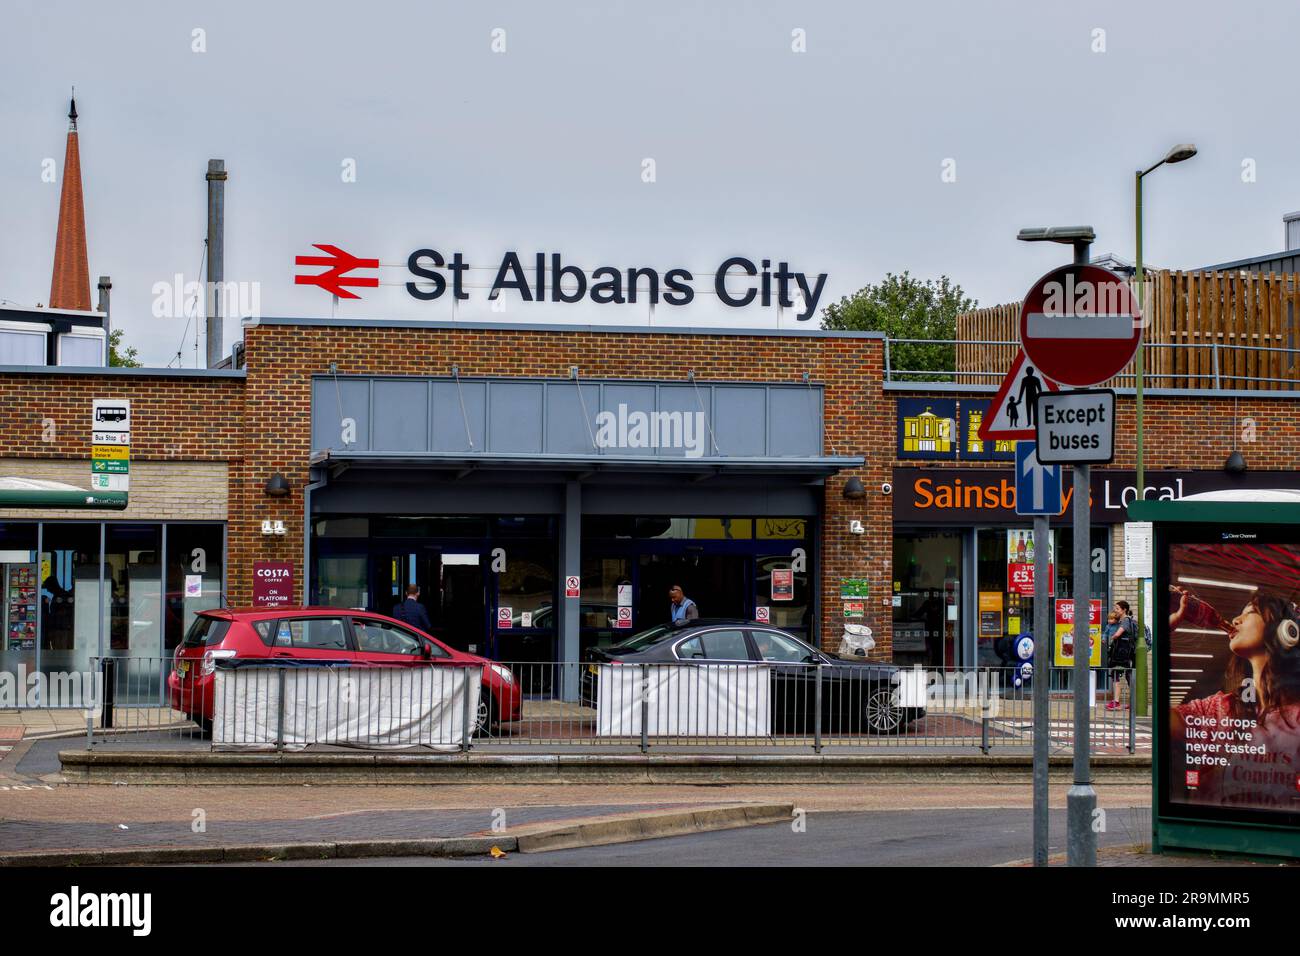 St.Albans City railway station, St.Albans, Hertfordshire, England, UK Stock Photo